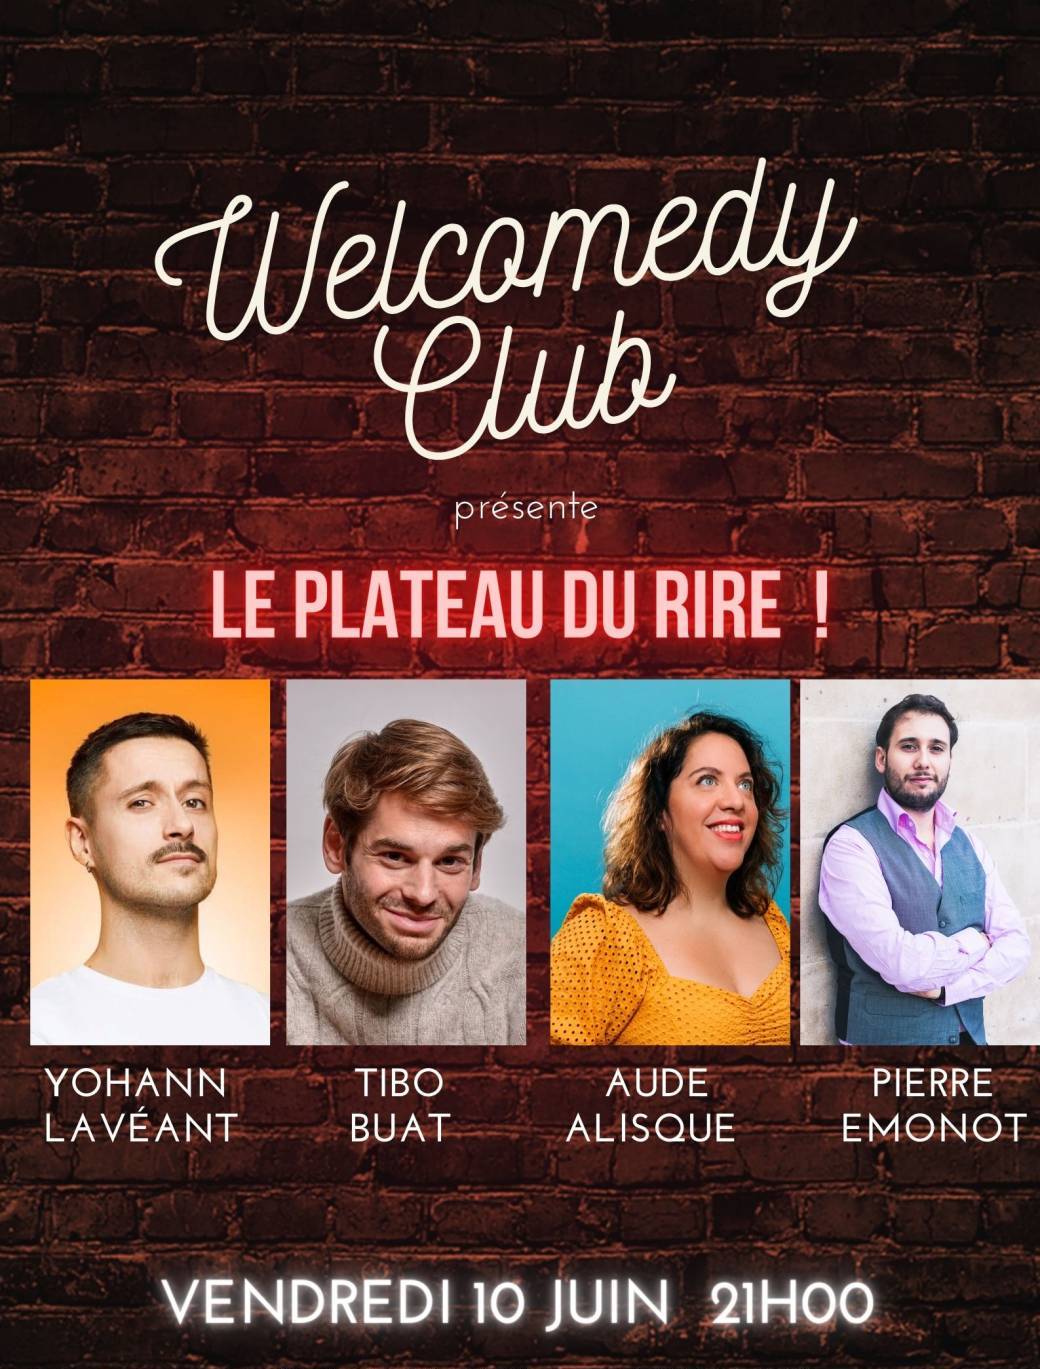 Welcomedy club - le plateau LAVEANT